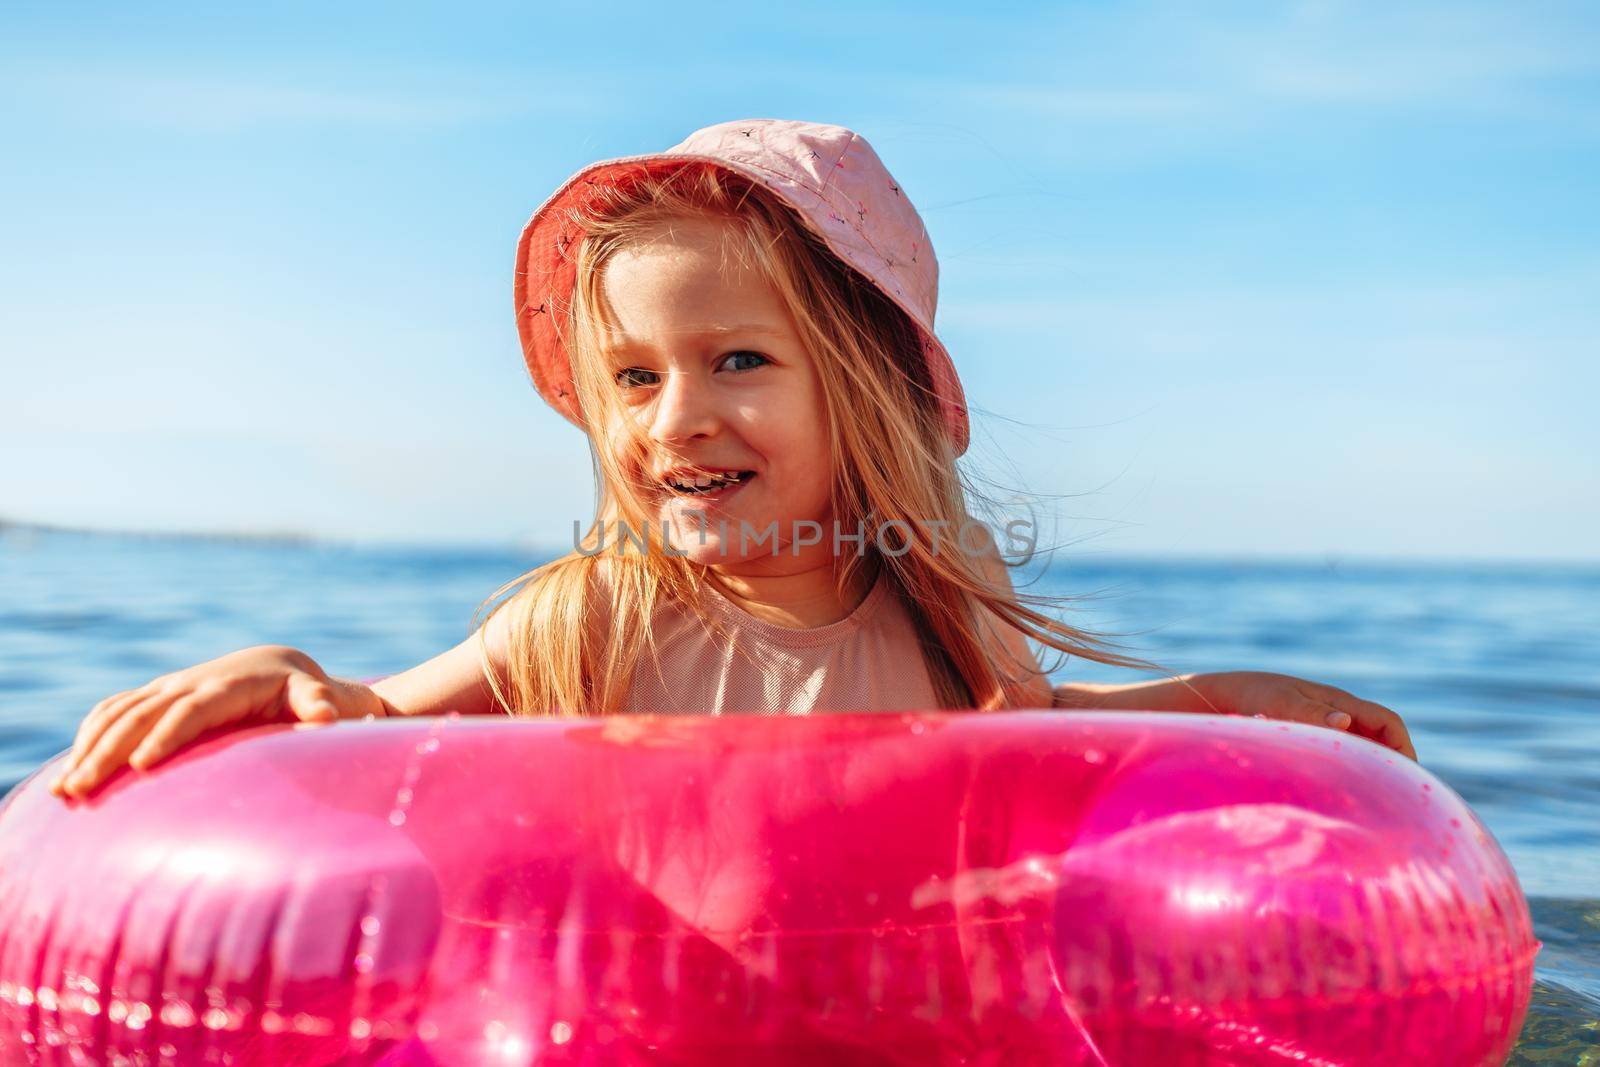 Girl kid in pink panama swimming in sea with pink circle